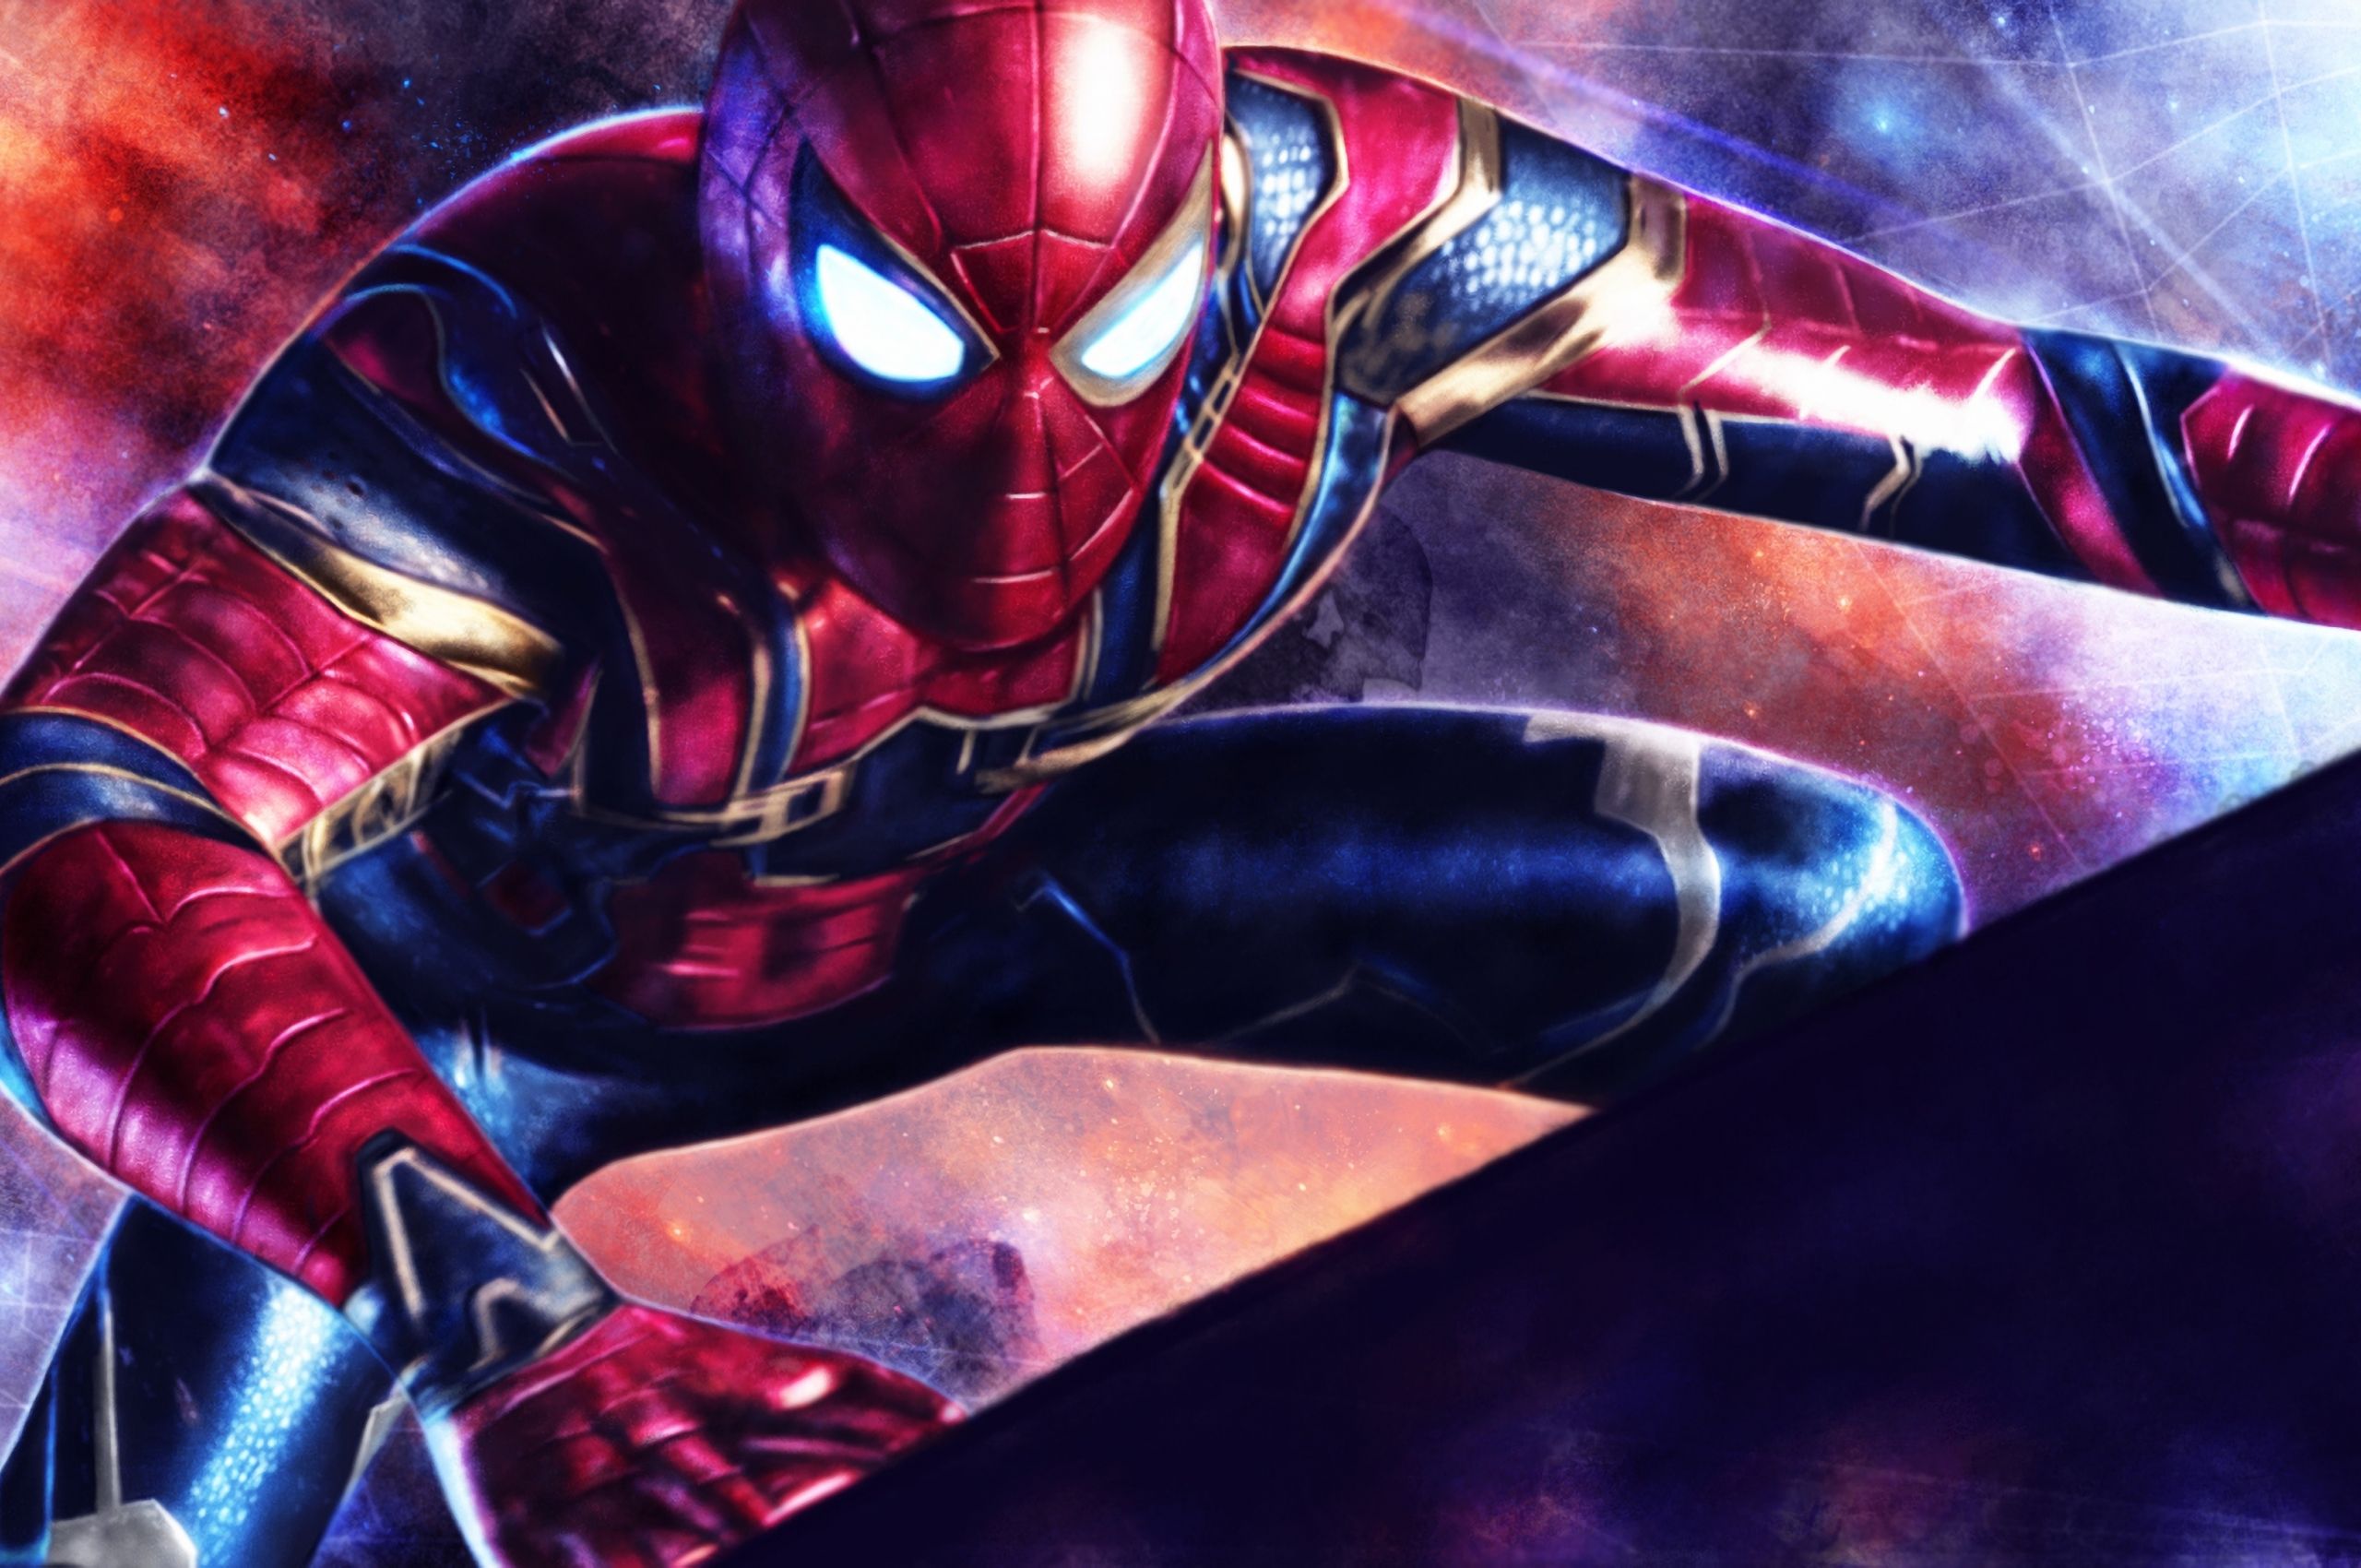 Spider Man In Avengers Infinity War Wallpapers